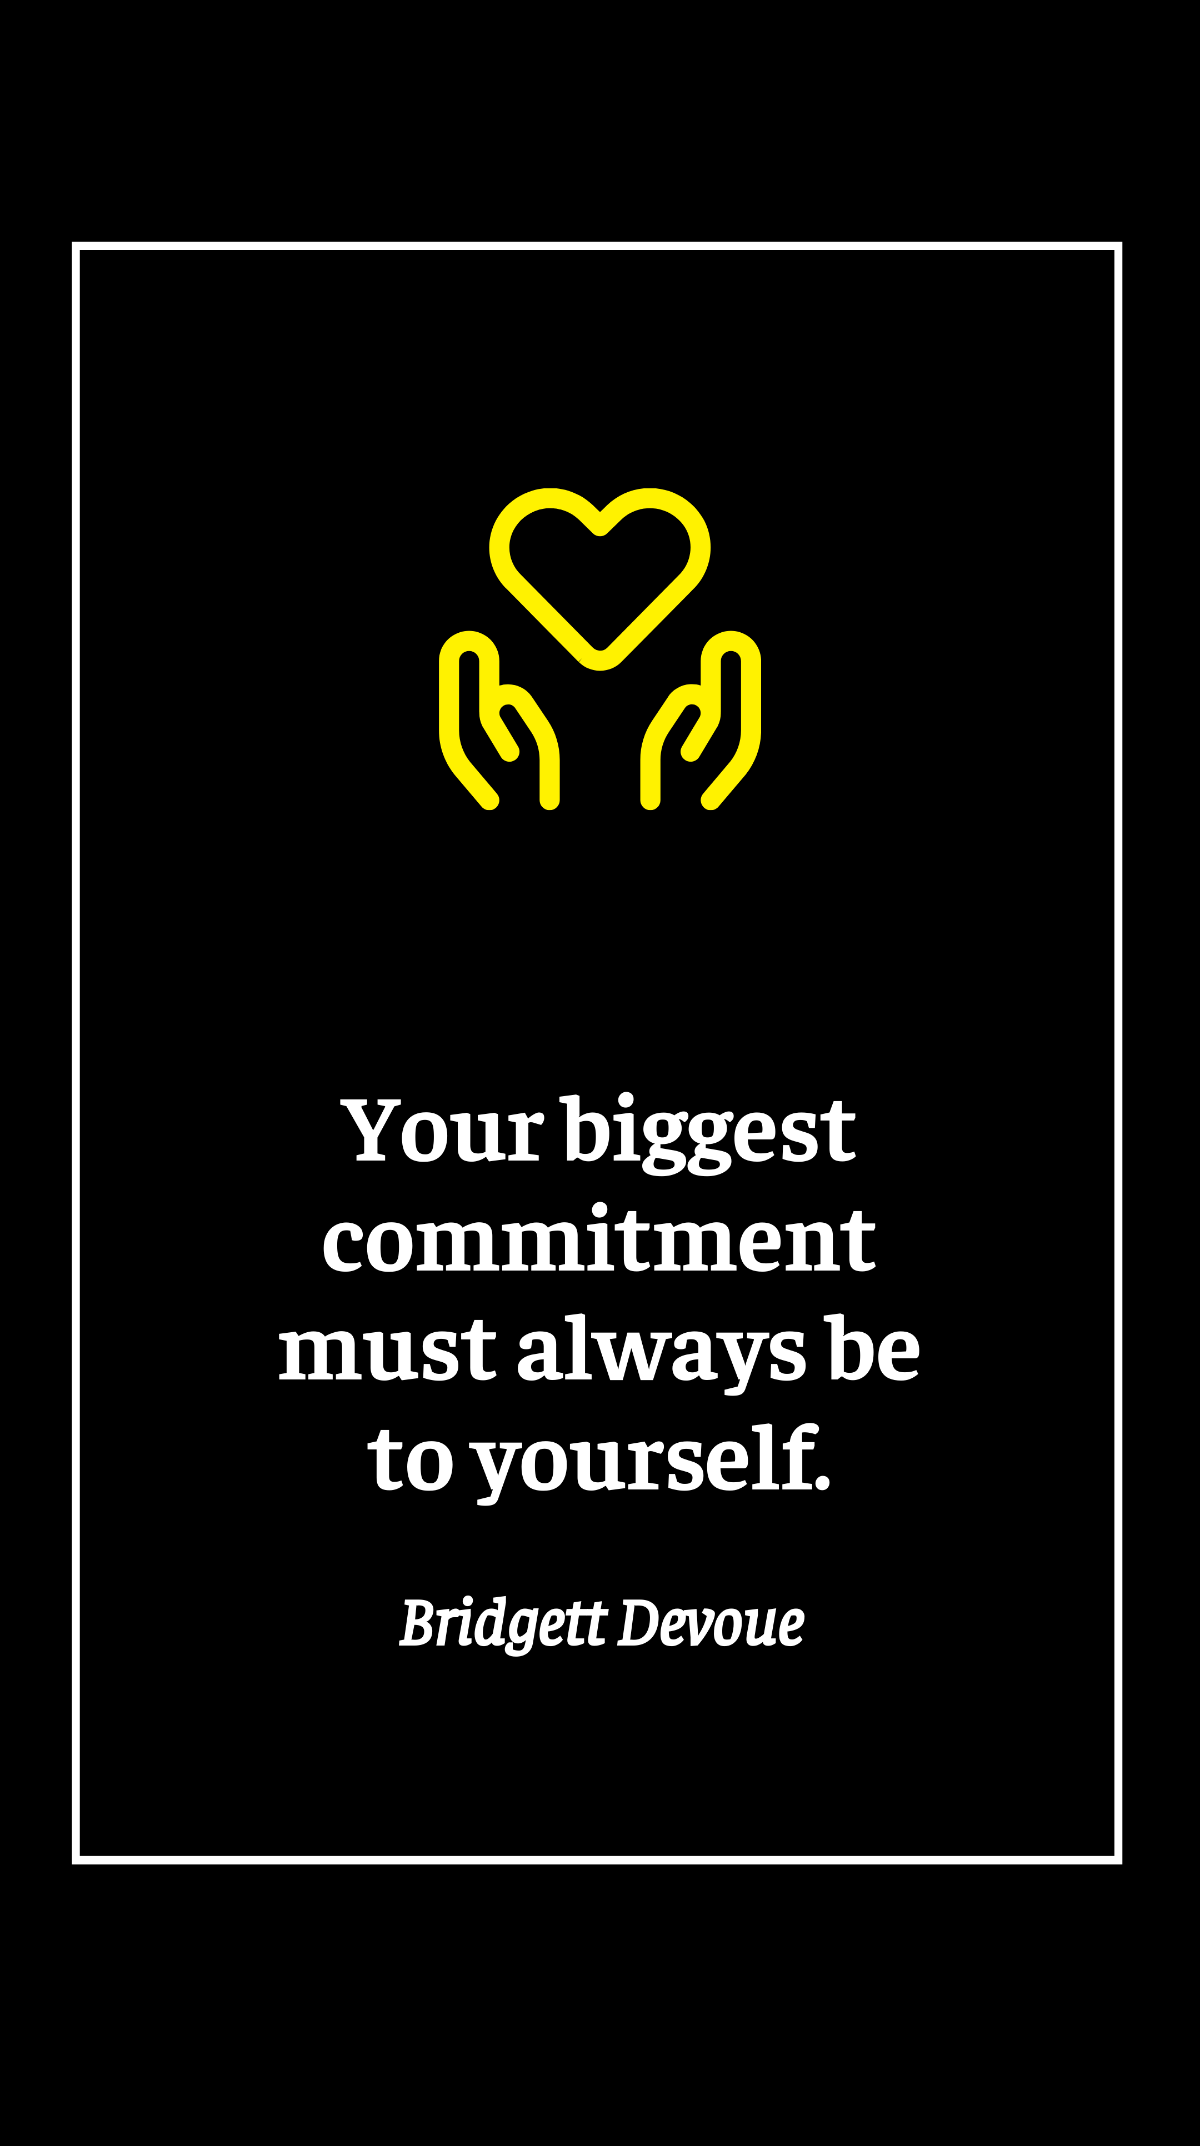 Bridgett Devoue - Your biggest commitment must always be to yourself. Template